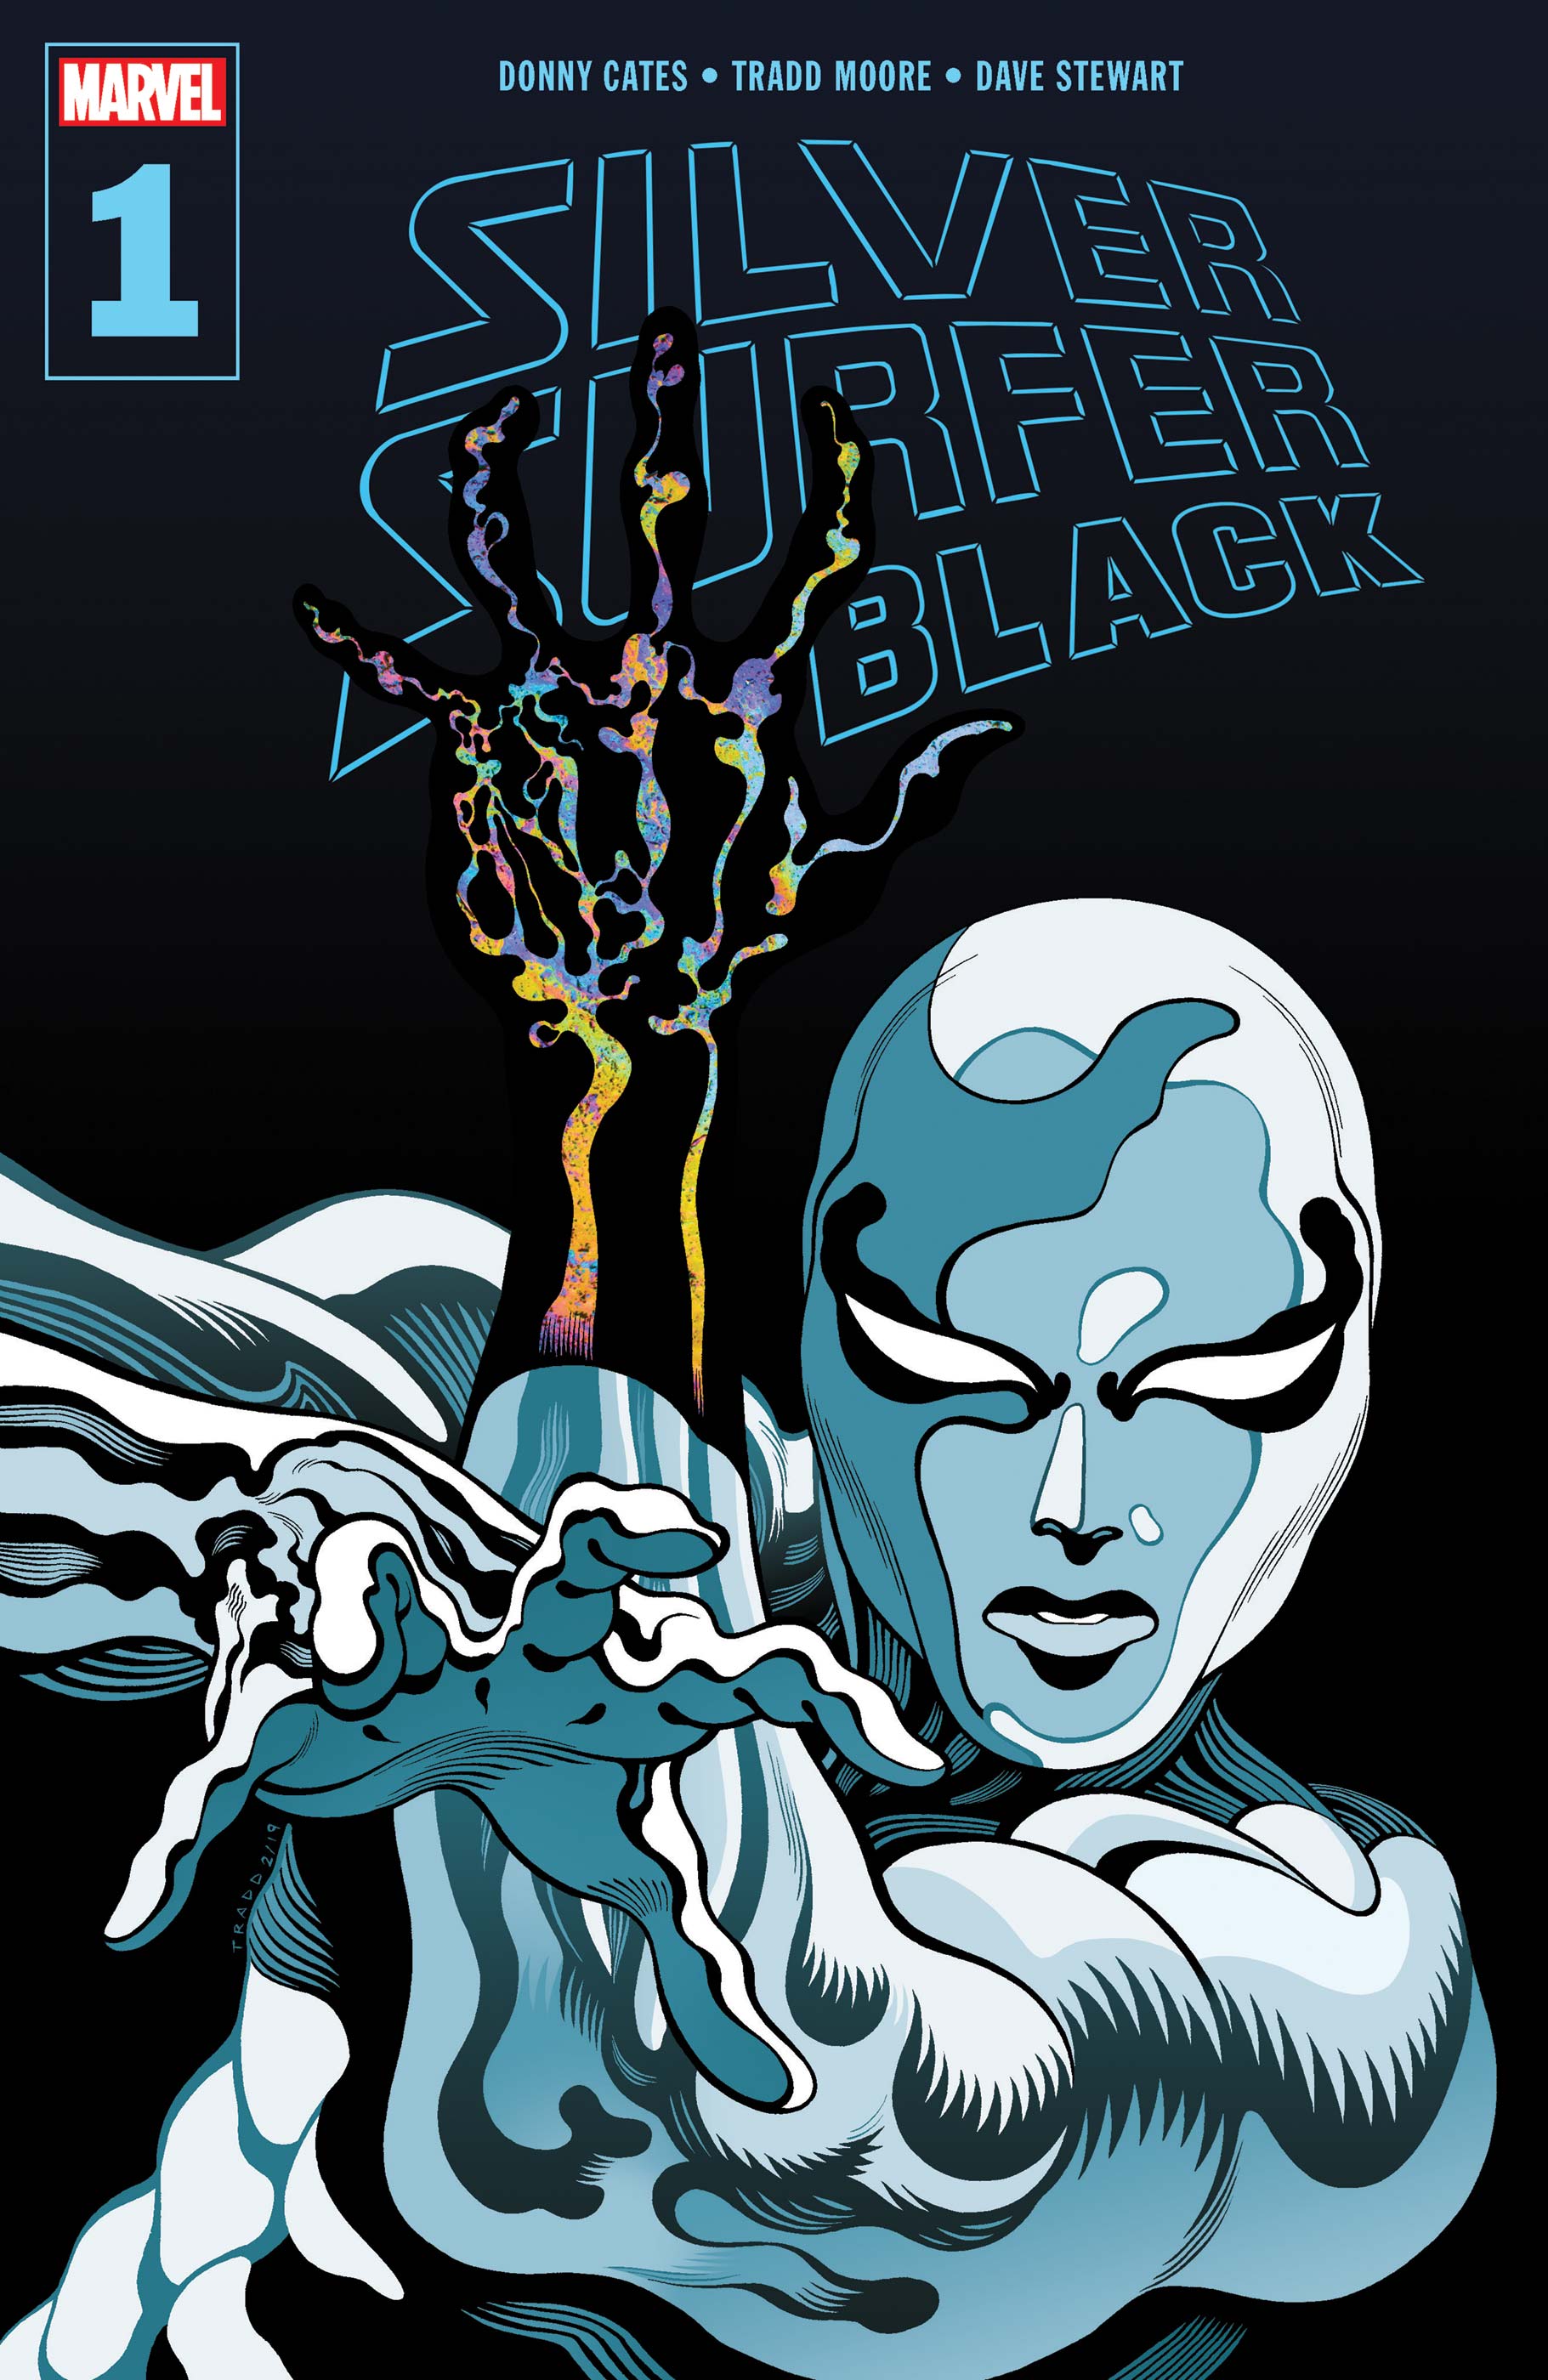 Silver Surfer: Black (2019) #1